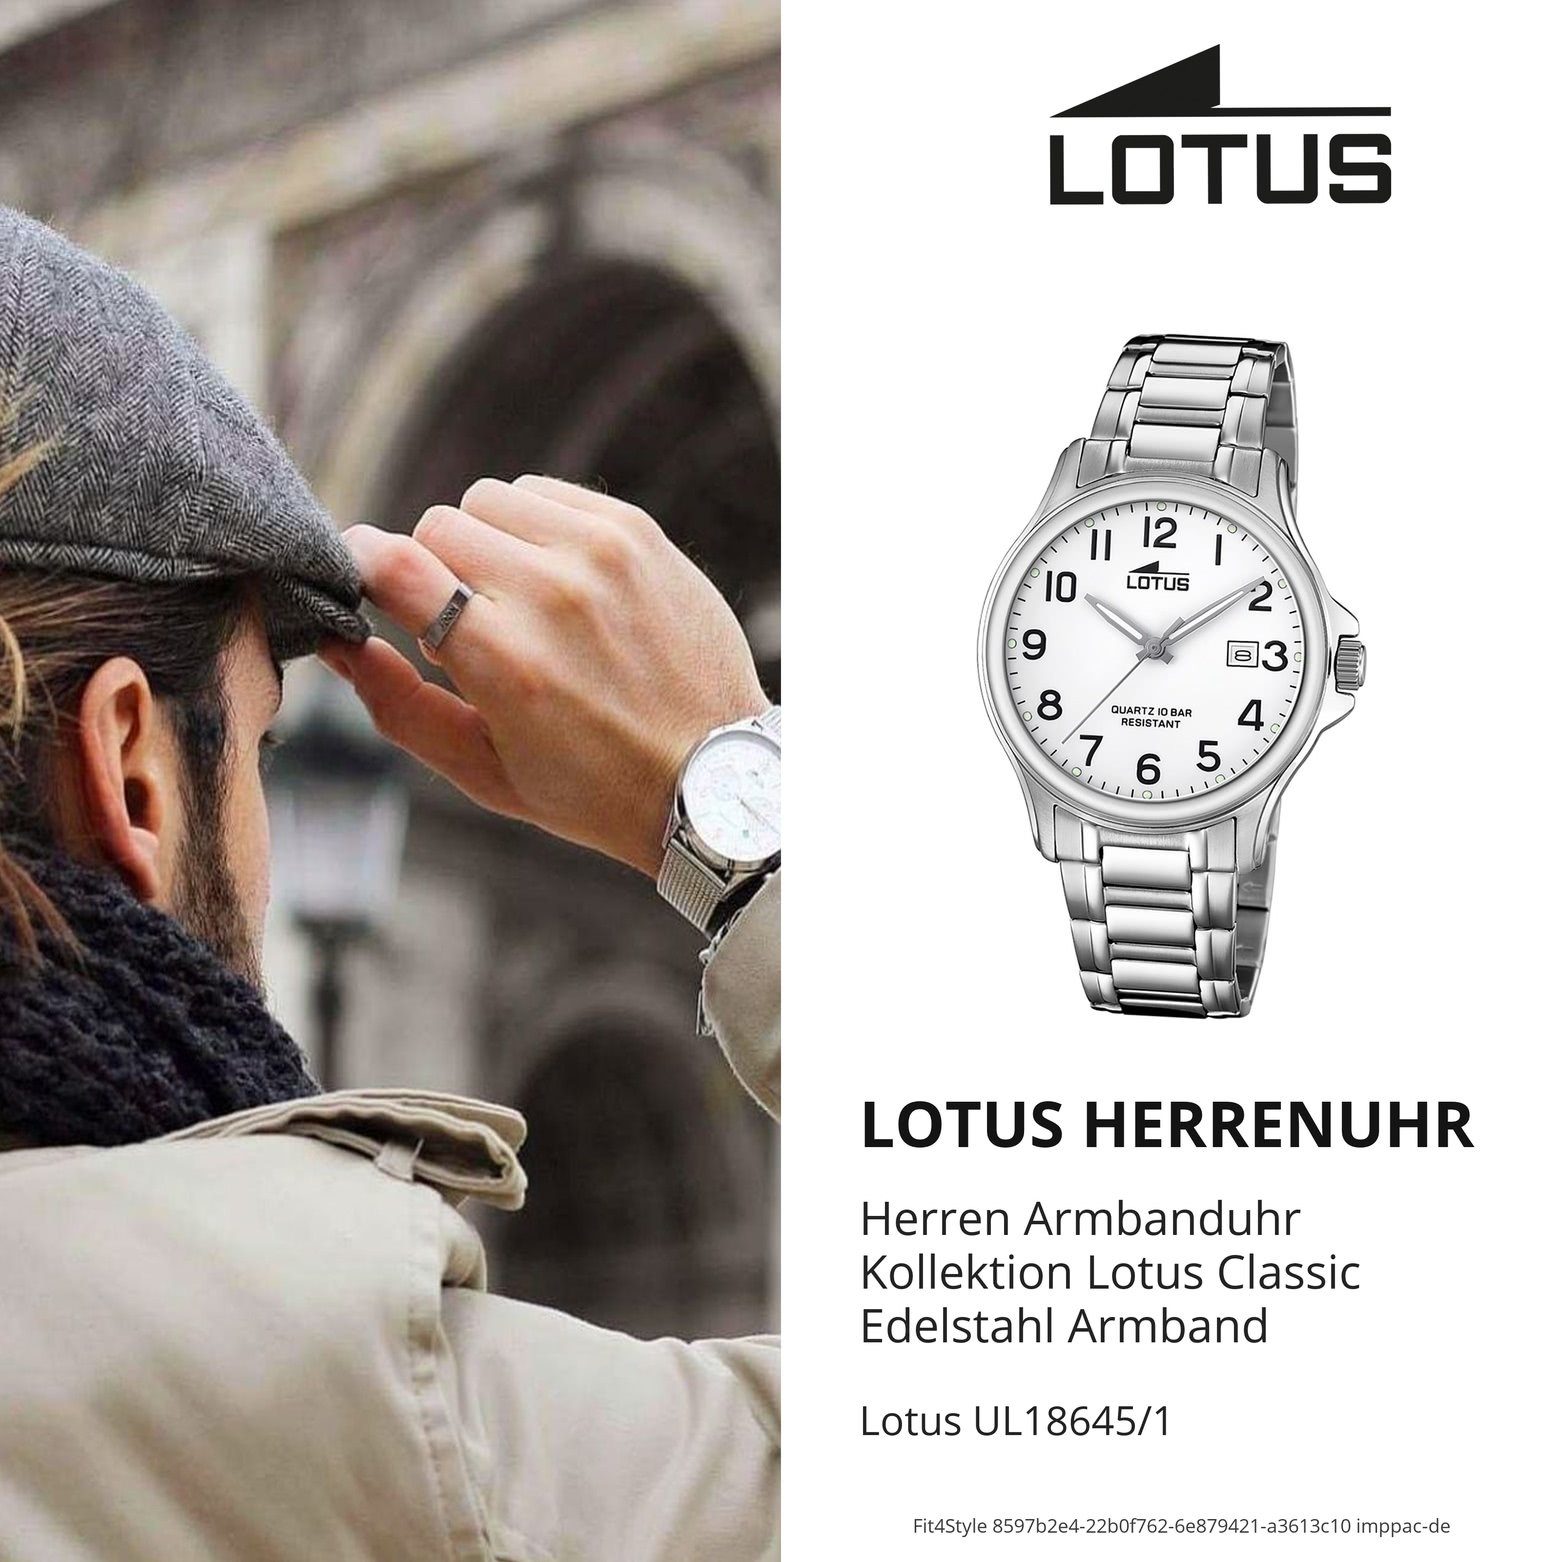 Lotus LOTUS rund, (ca. Armbanduhr Elegant Herren silber groß 40mm), 18645/1, Edelstahlarmband Herren Quarzuhr Uhr